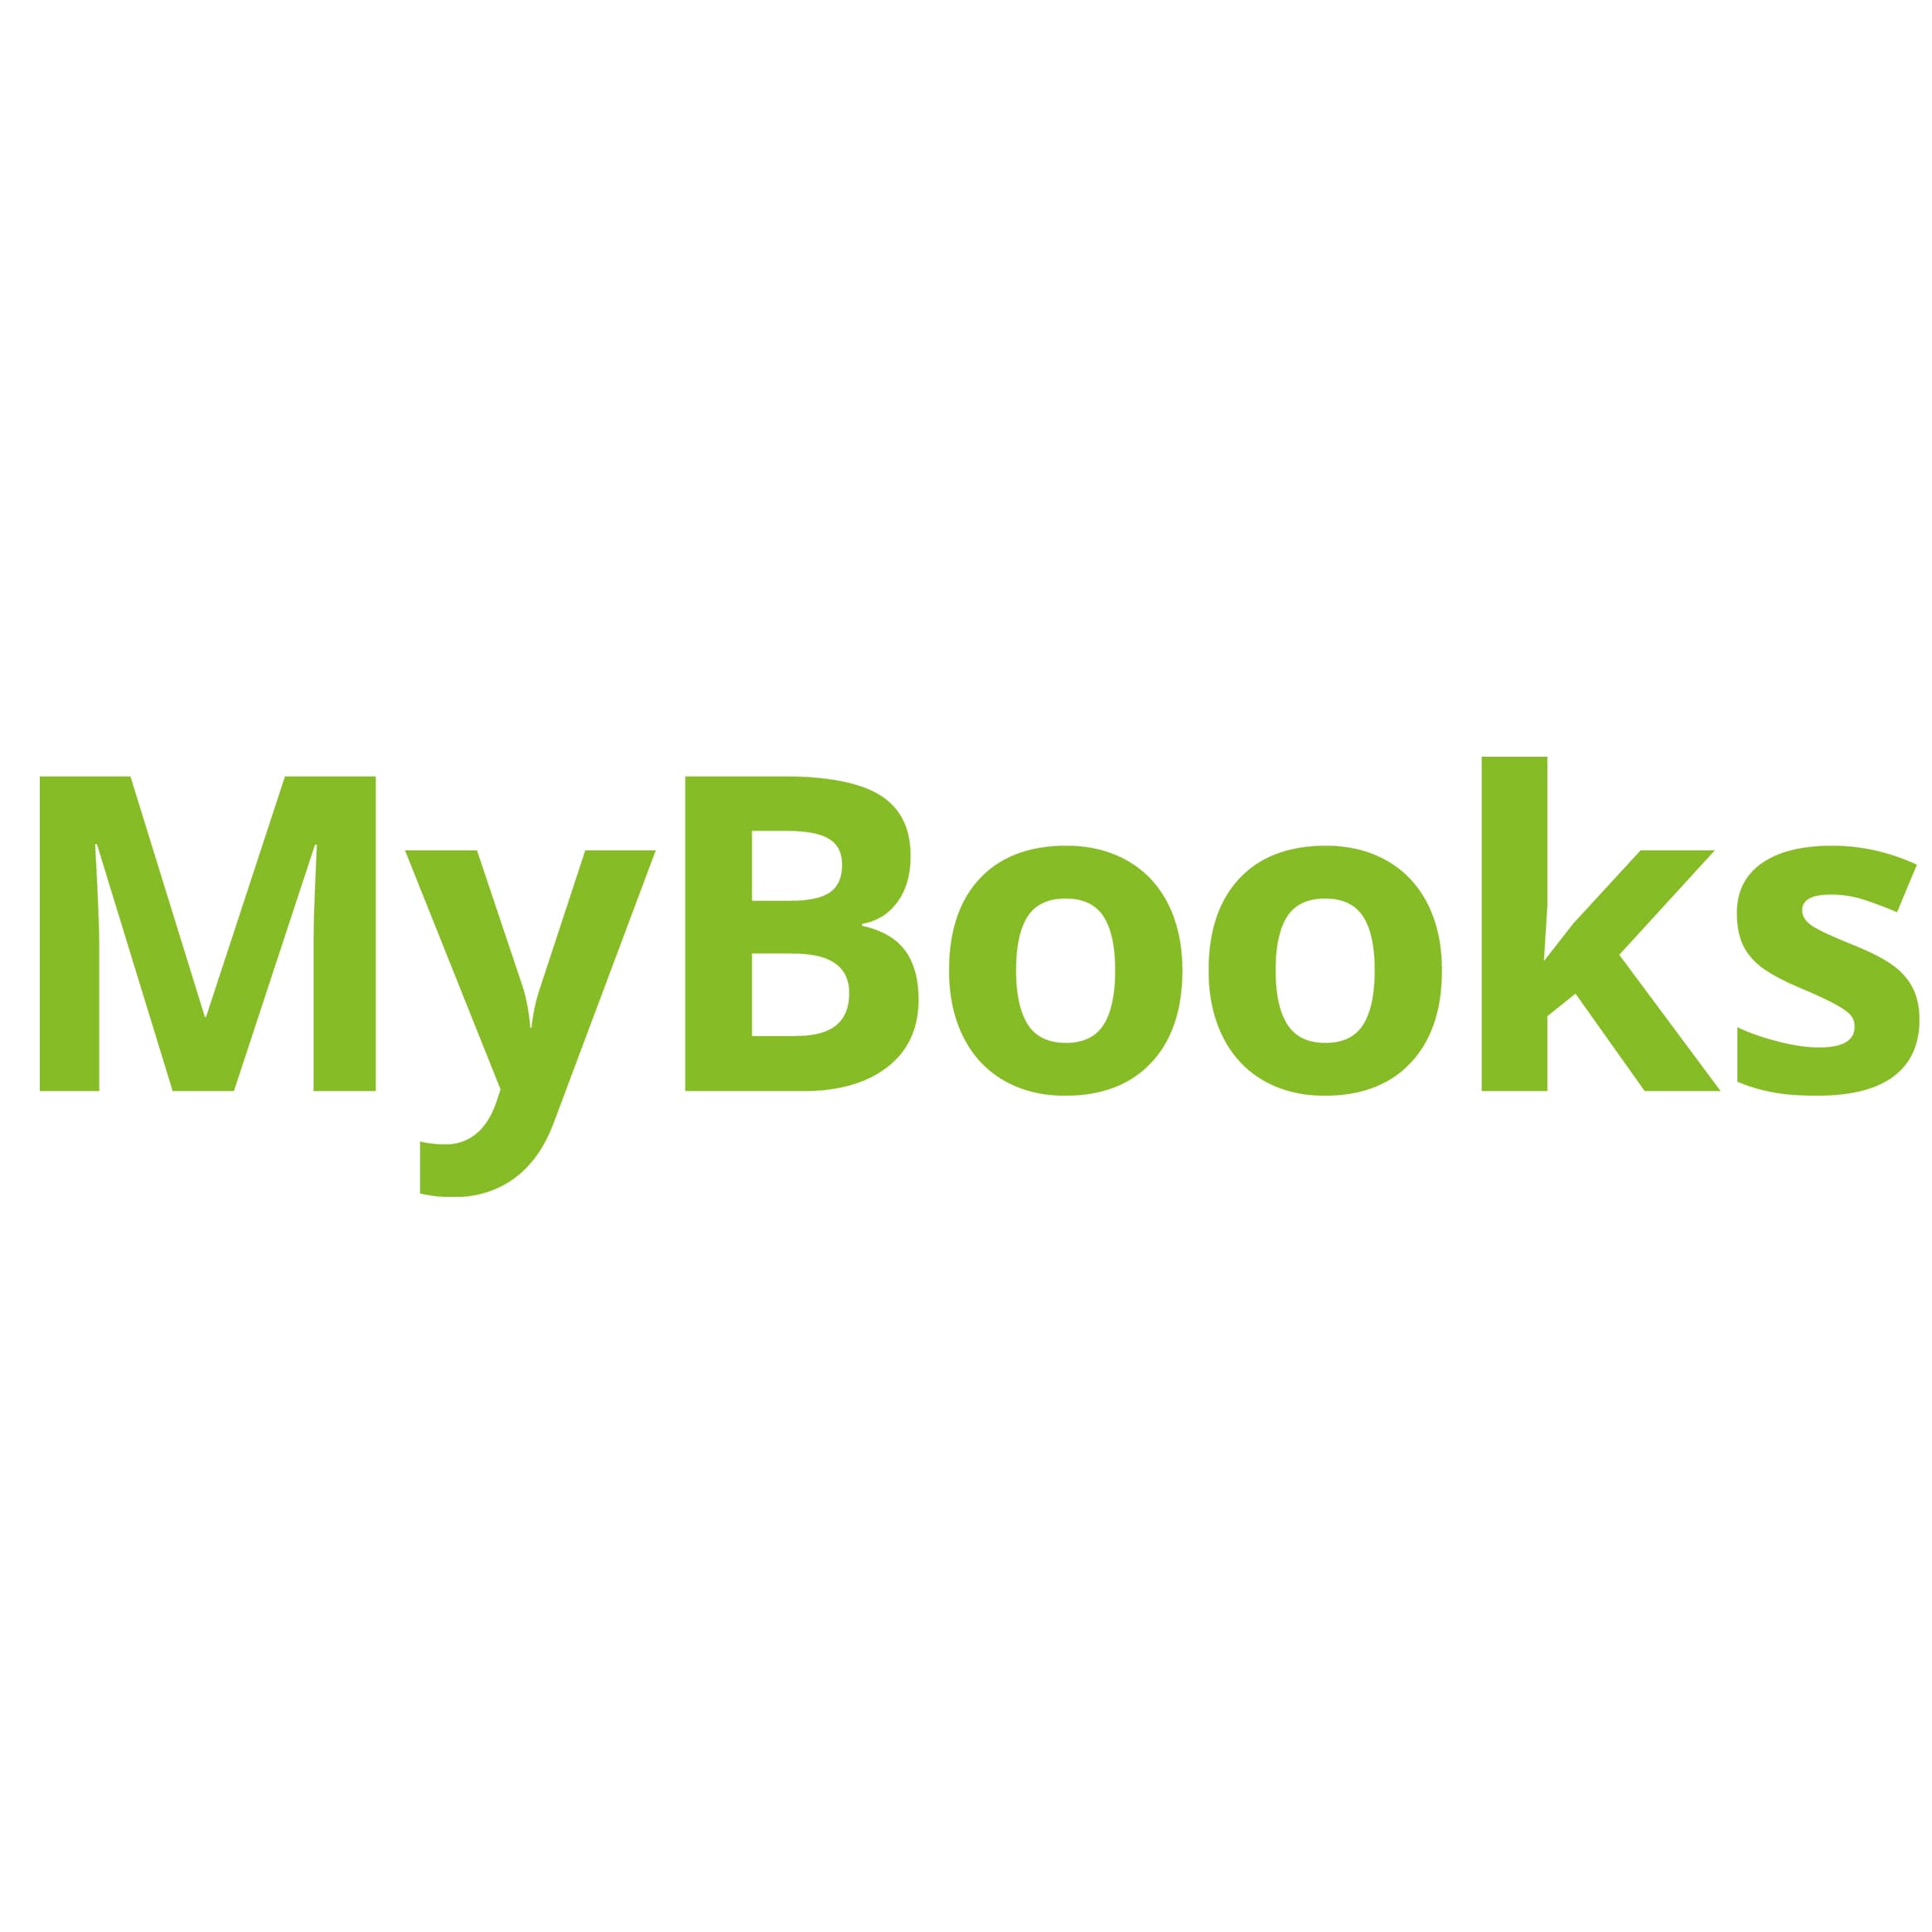 MyBooks Wordmark